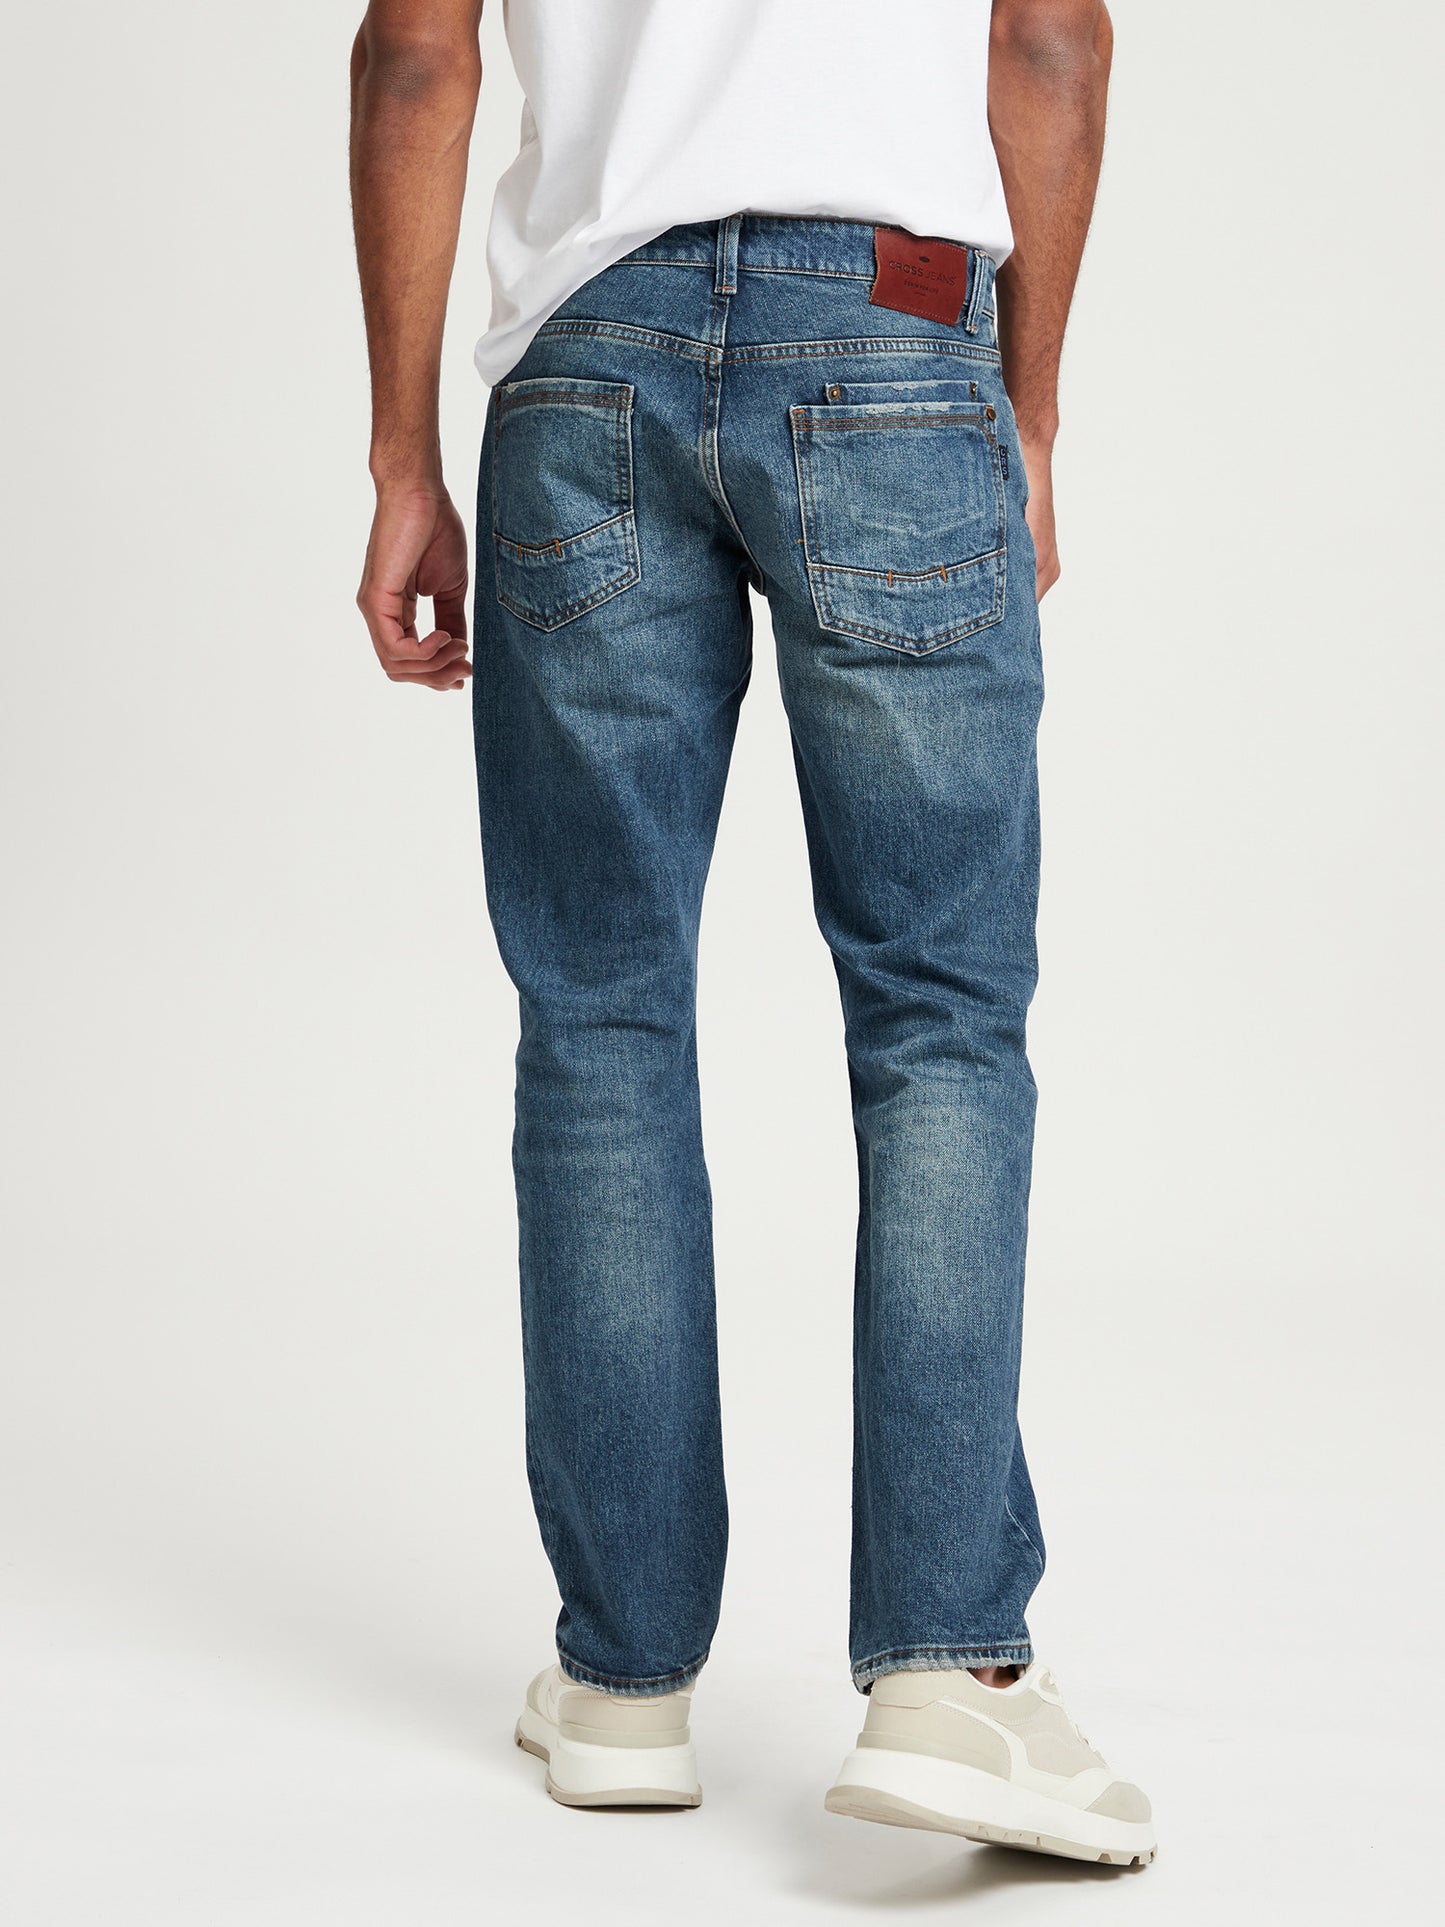 Dylan men's jeans regular fit regular waist straight leg blue